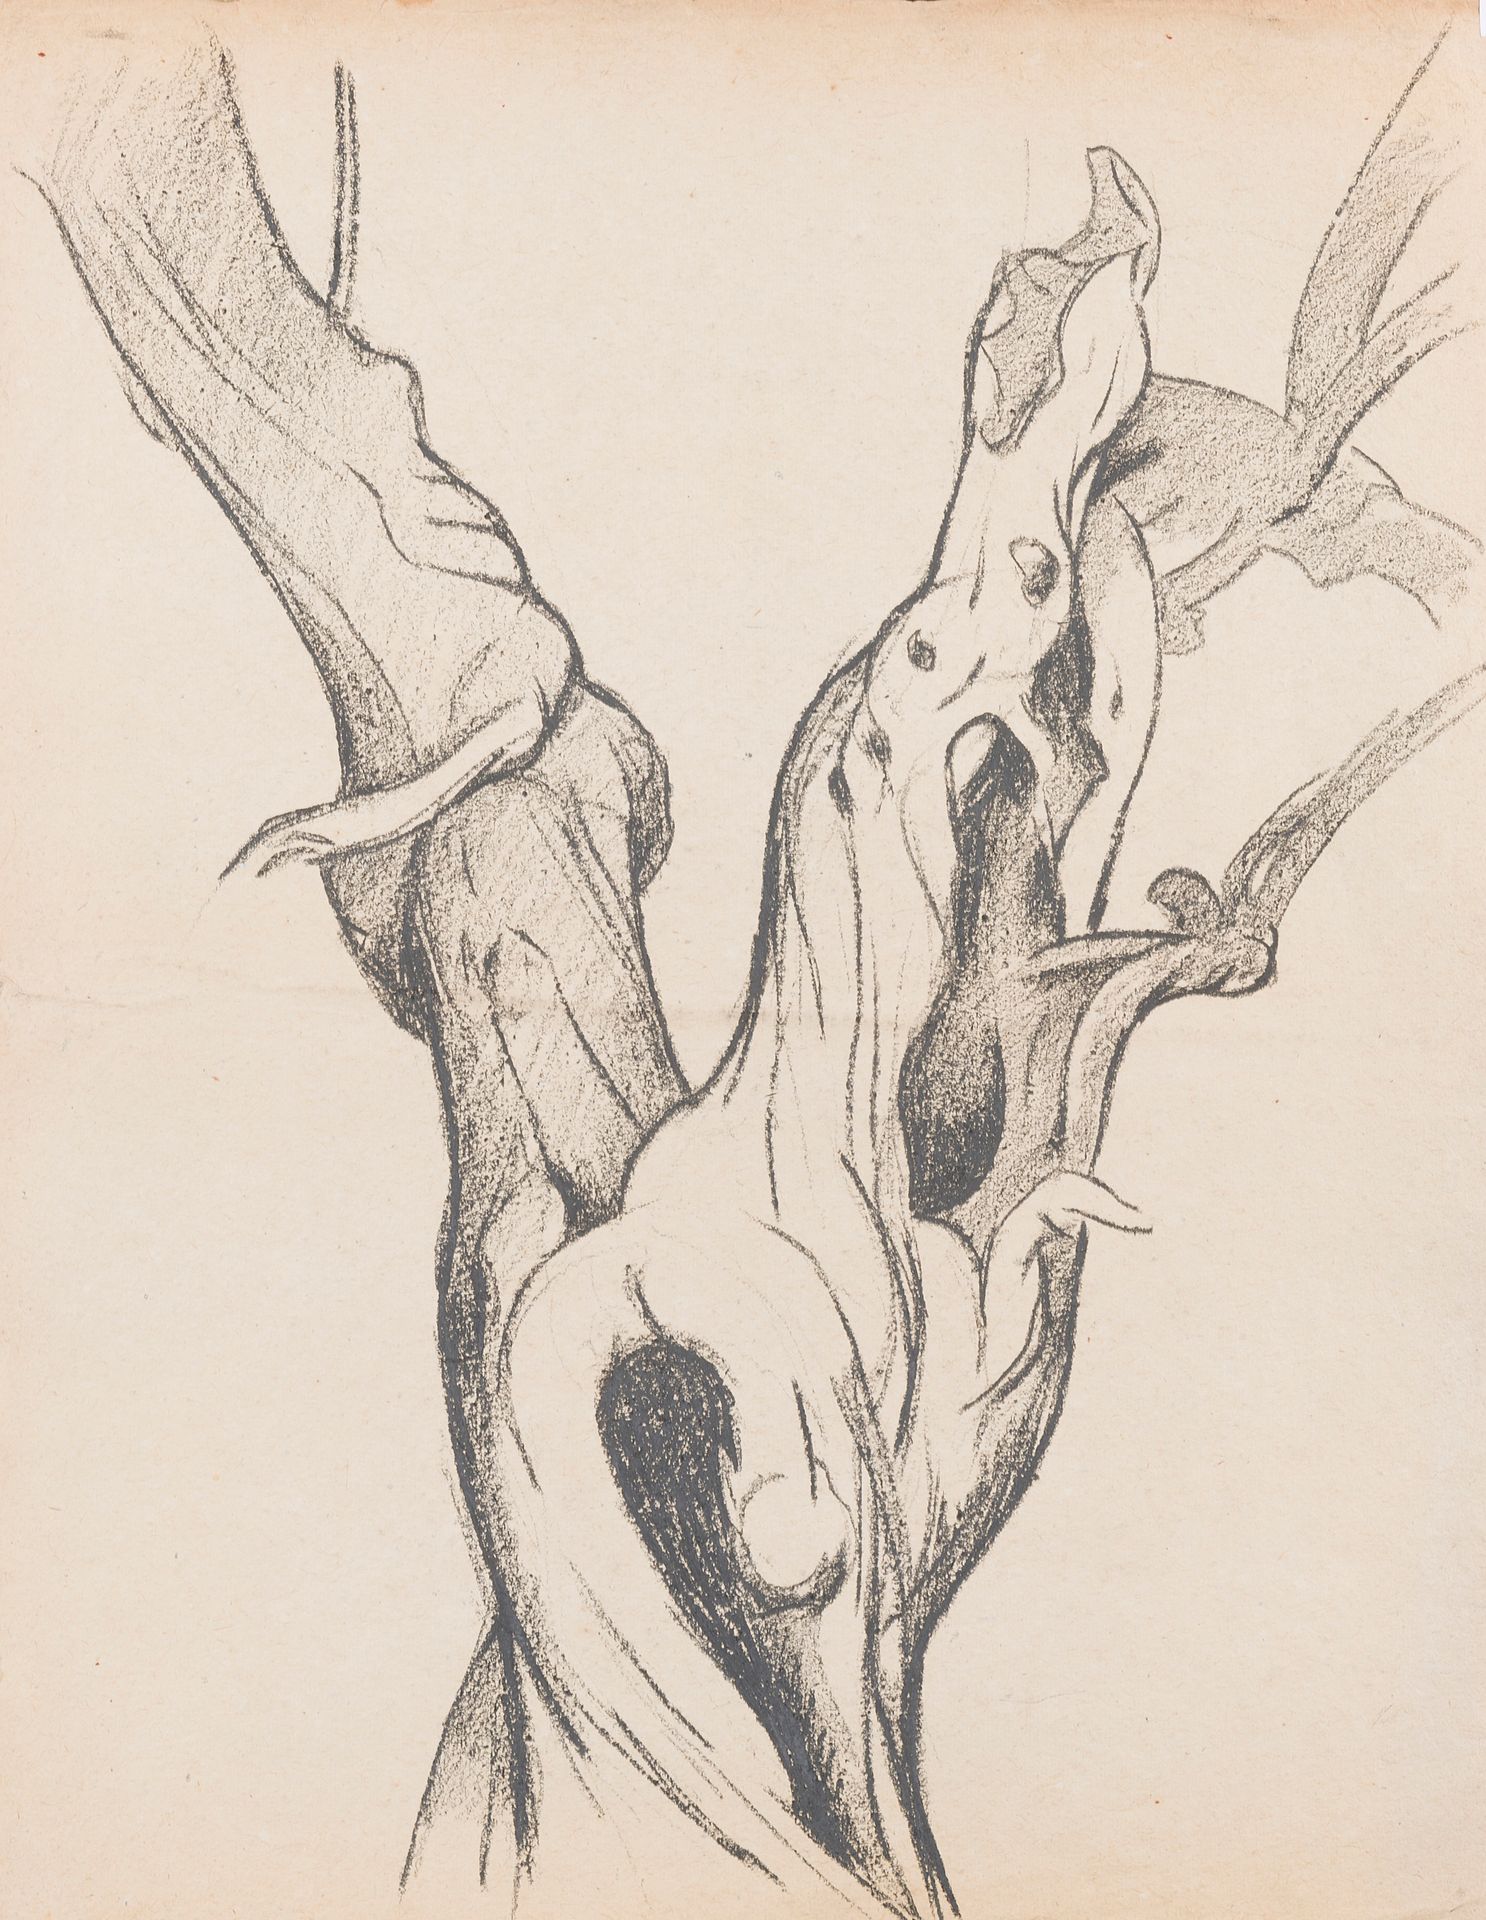 Null 查尔斯-皮卡特-勒杜 (1881-1959)
枯树，1935年
木炭
57 x 44 cm